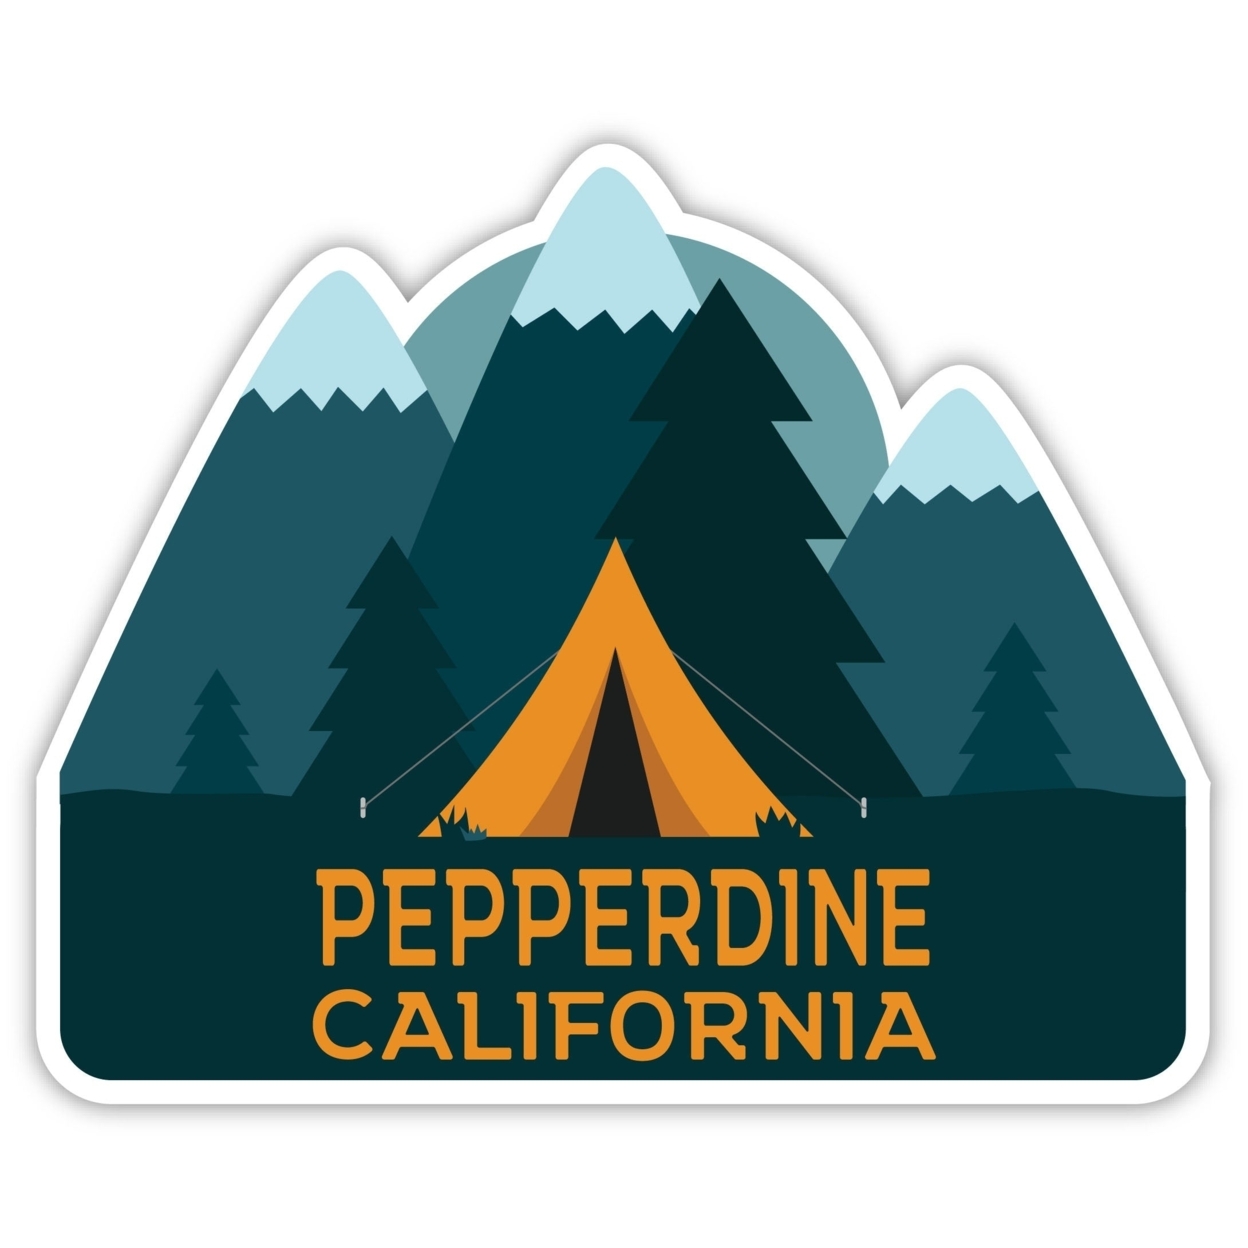 Pepperdine California Souvenir Decorative Stickers (Choose Theme And Size) - Single Unit, 2-Inch, Tent